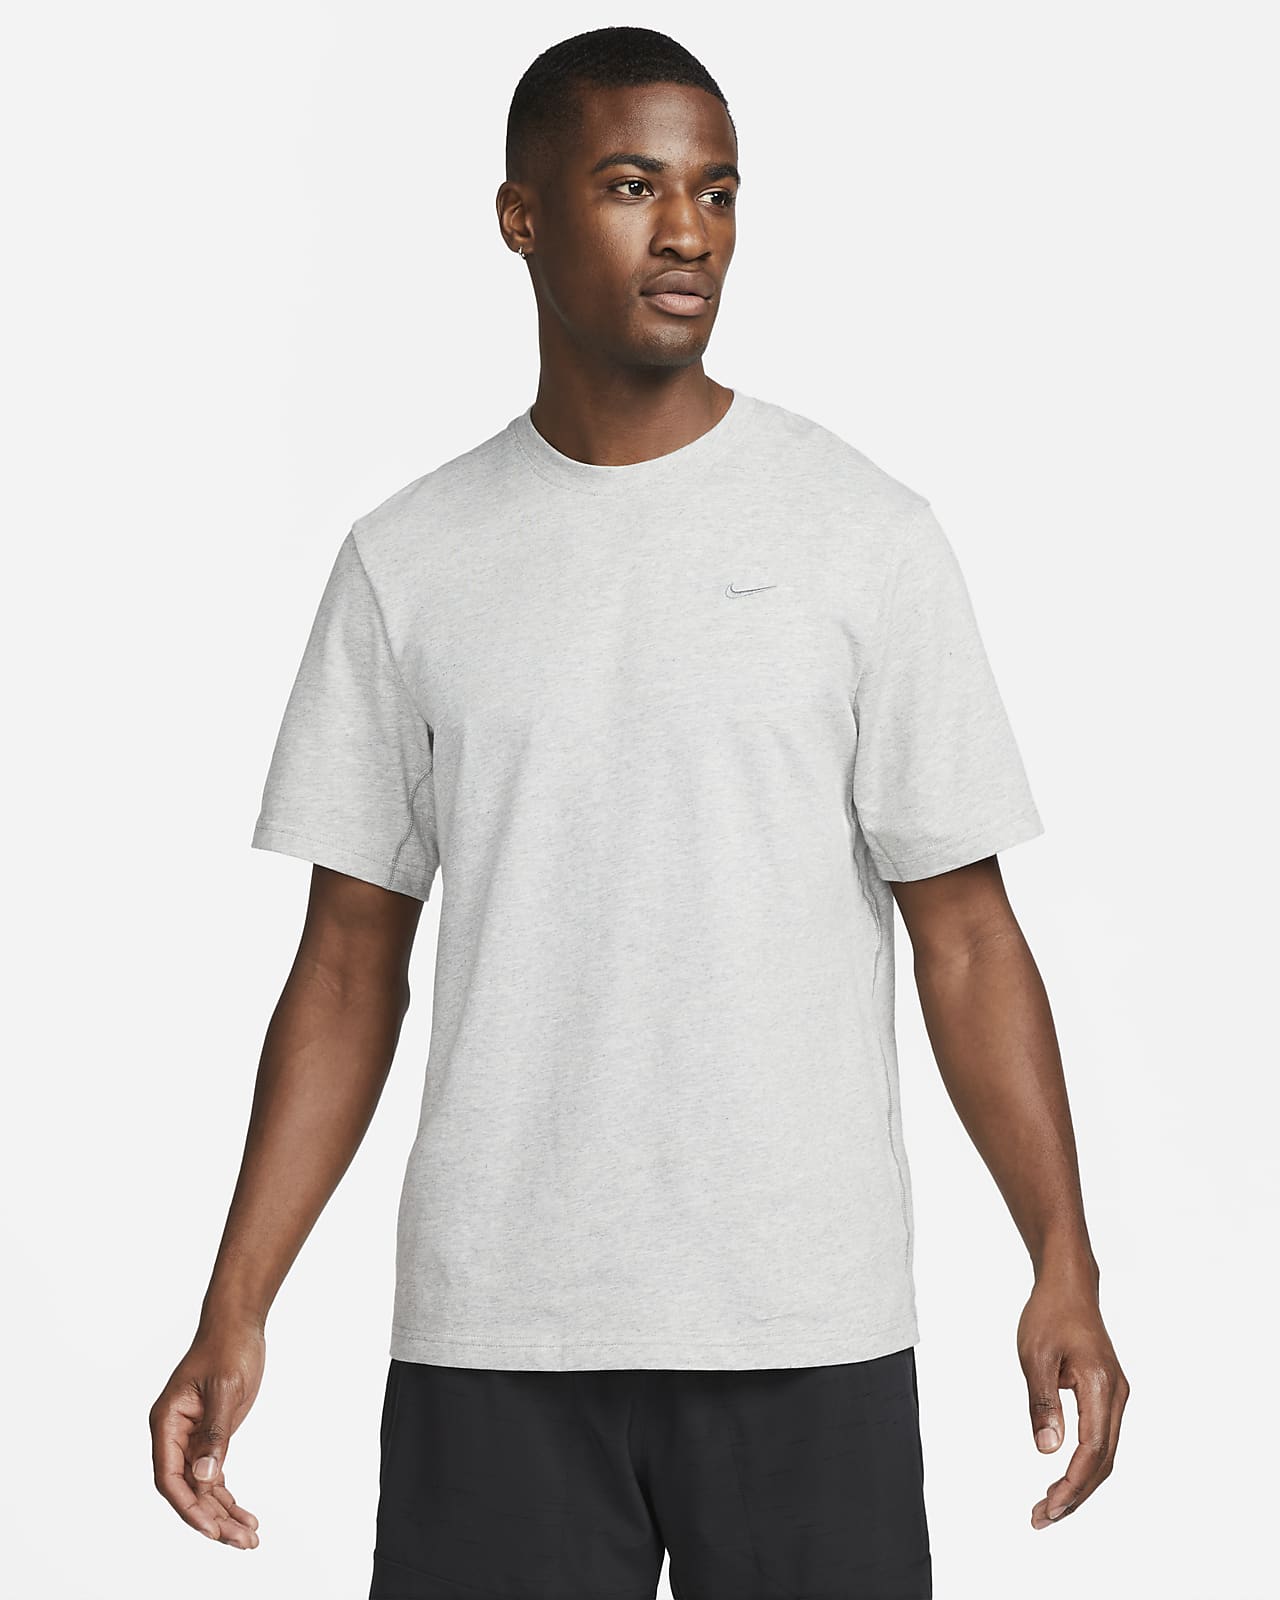 Nike Dri-FIT Primary Men's Versatile Fitness T-Shirt